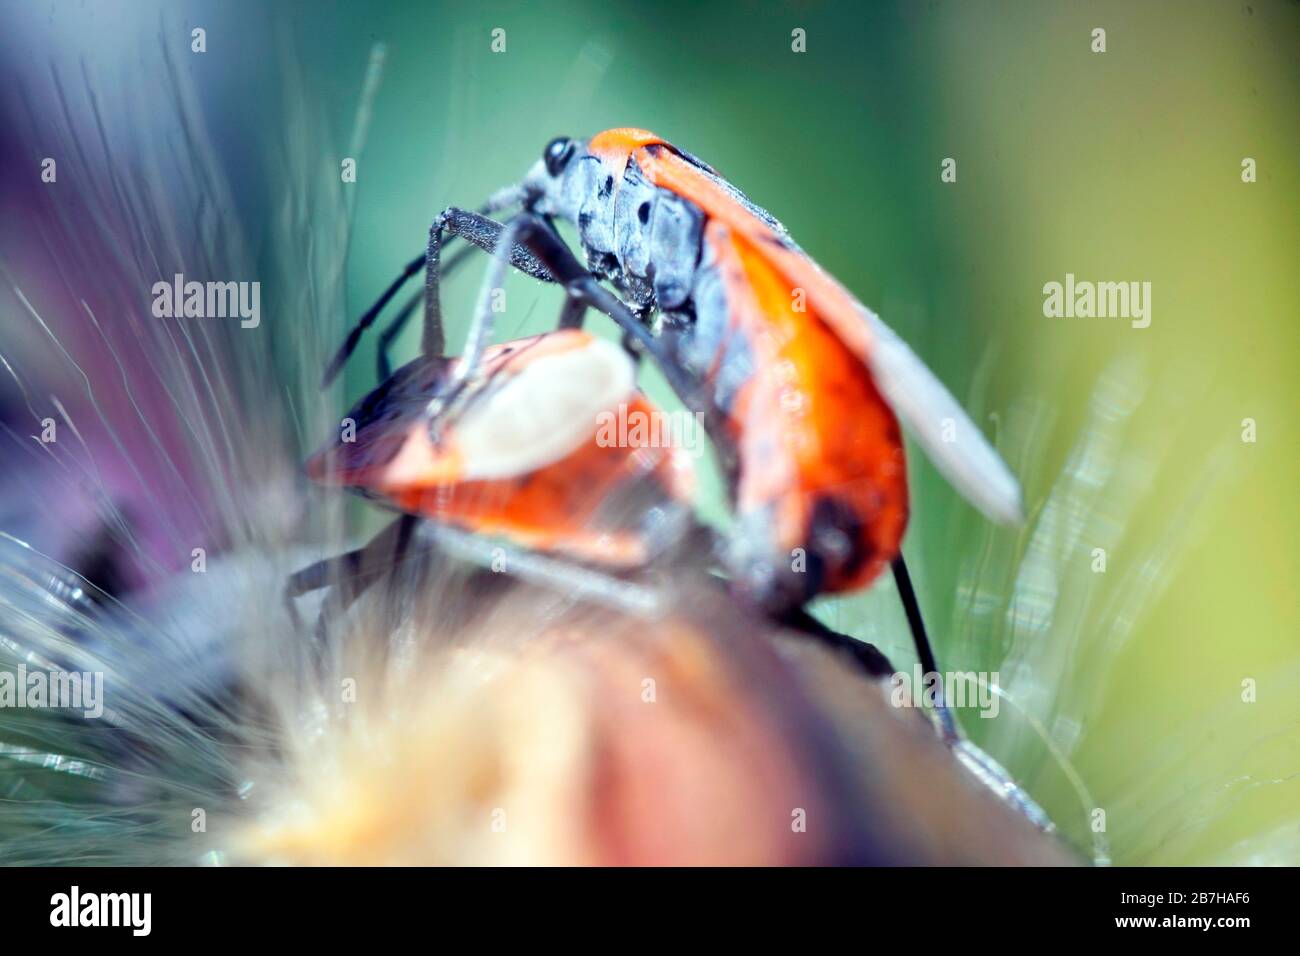 European firebug (Pyrrhocoris apterus) fotografia di closeup estremo. Foto Stock